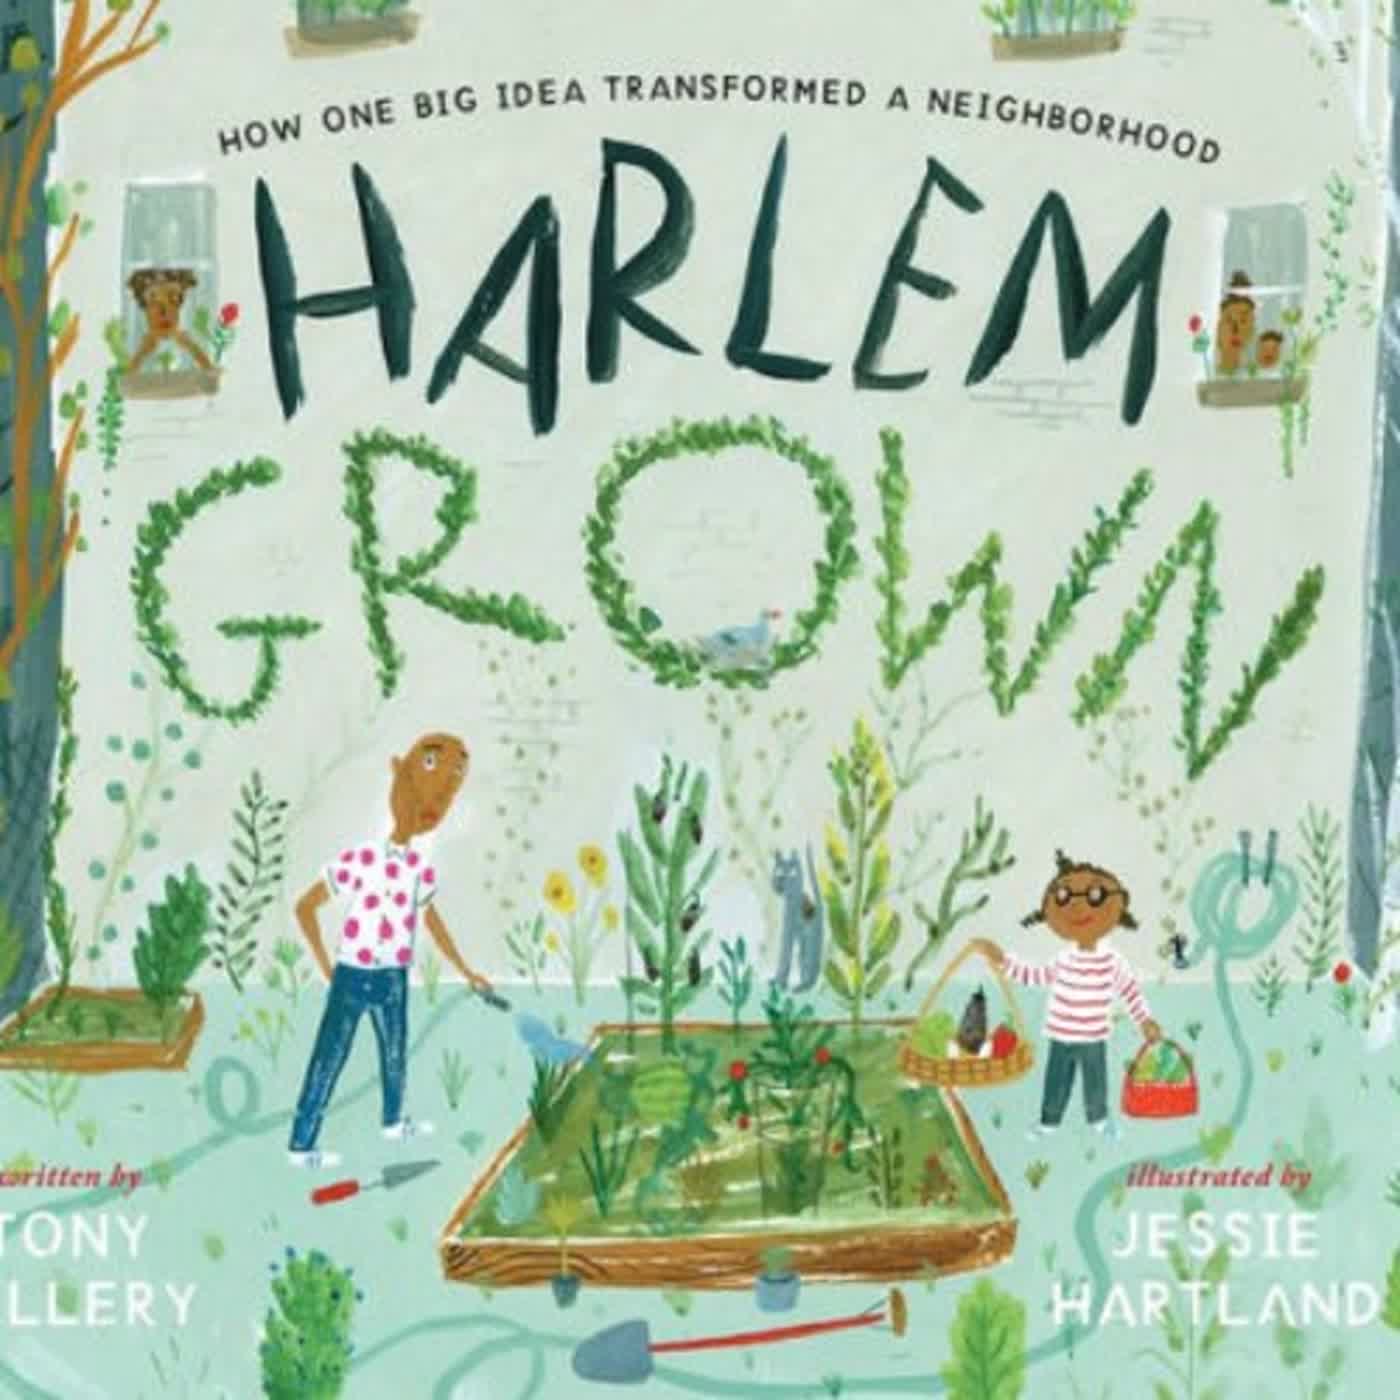 {epub download} Harlem Grown: How One Big Idea Transformed a Neighborhood by Tony Hillery, Jessie Hartland